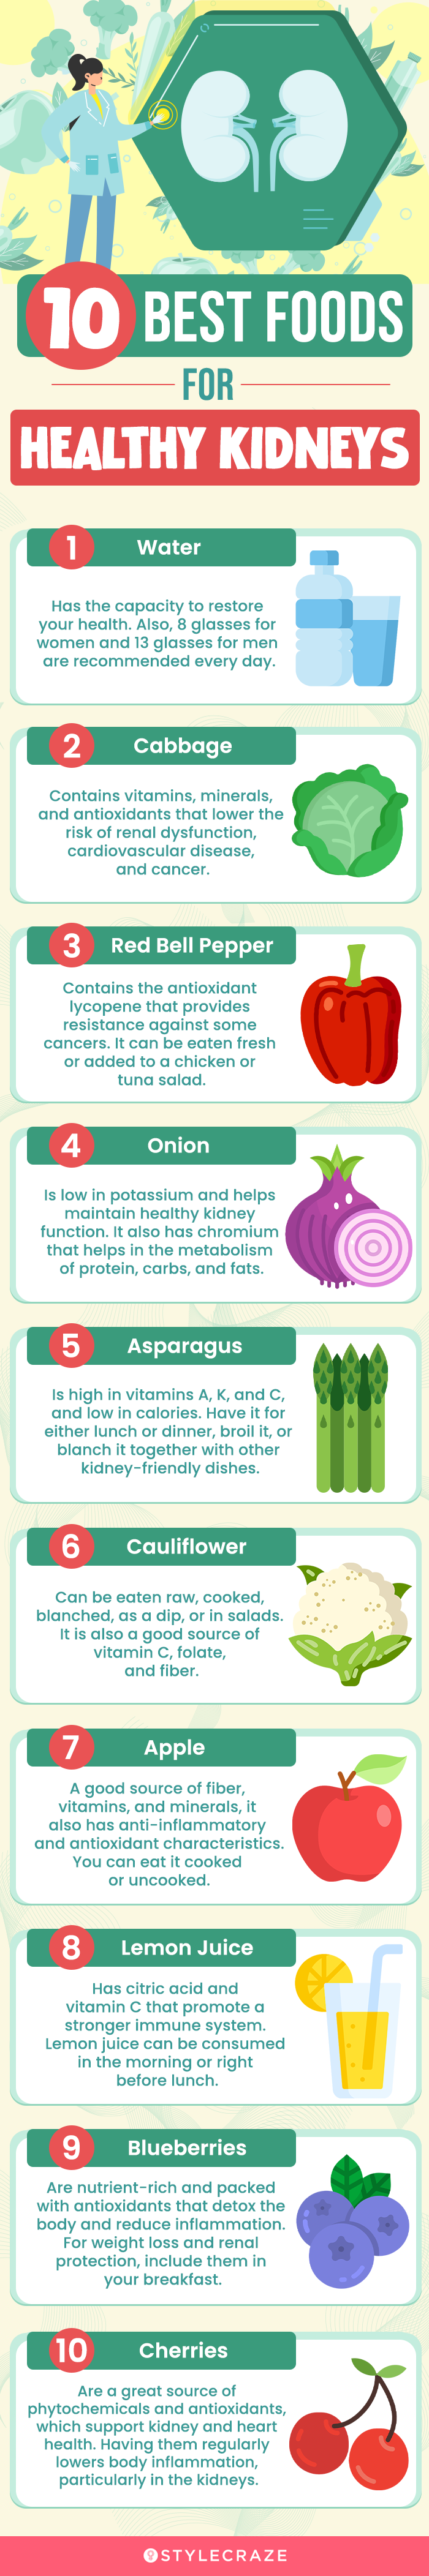 10 best foods for healthy kidneys [infographic]